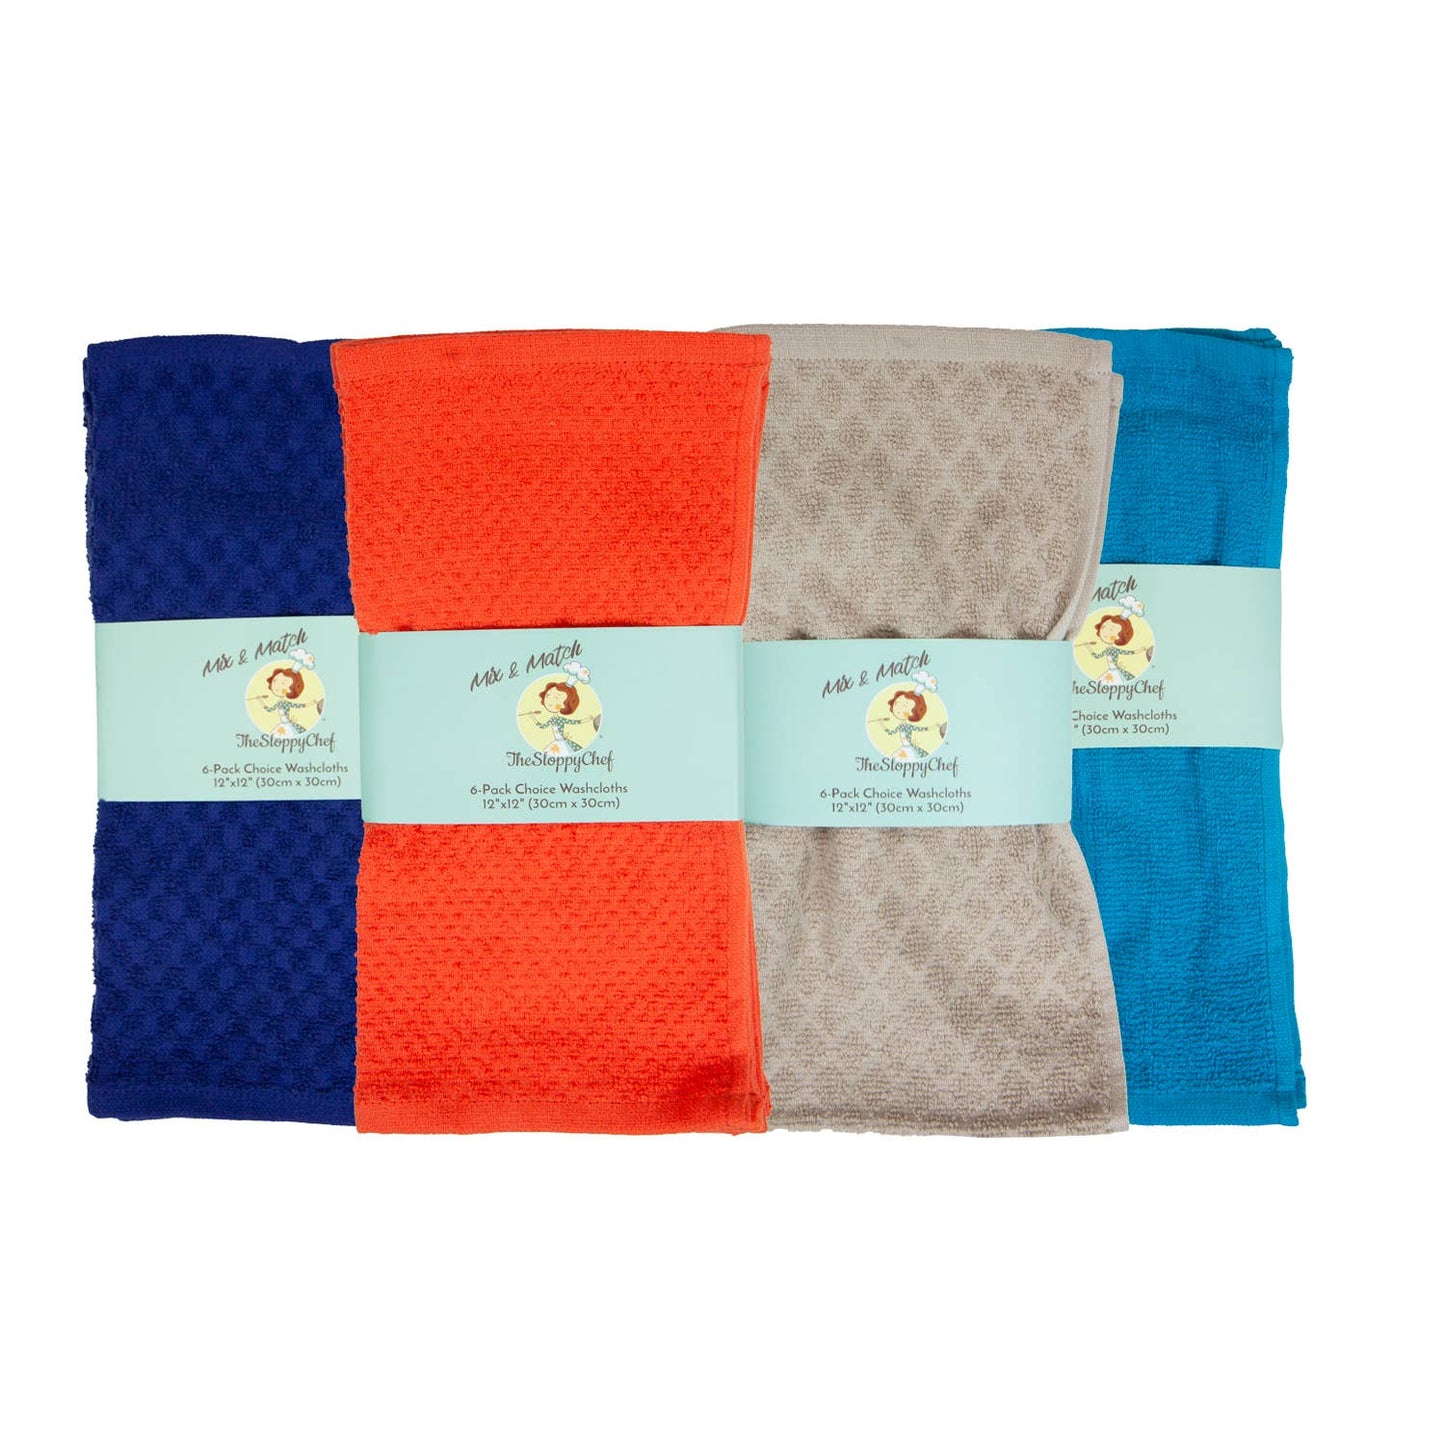 Mix & Match Sloppy Chef Dishcloth Towel 6 Pack - 12x12